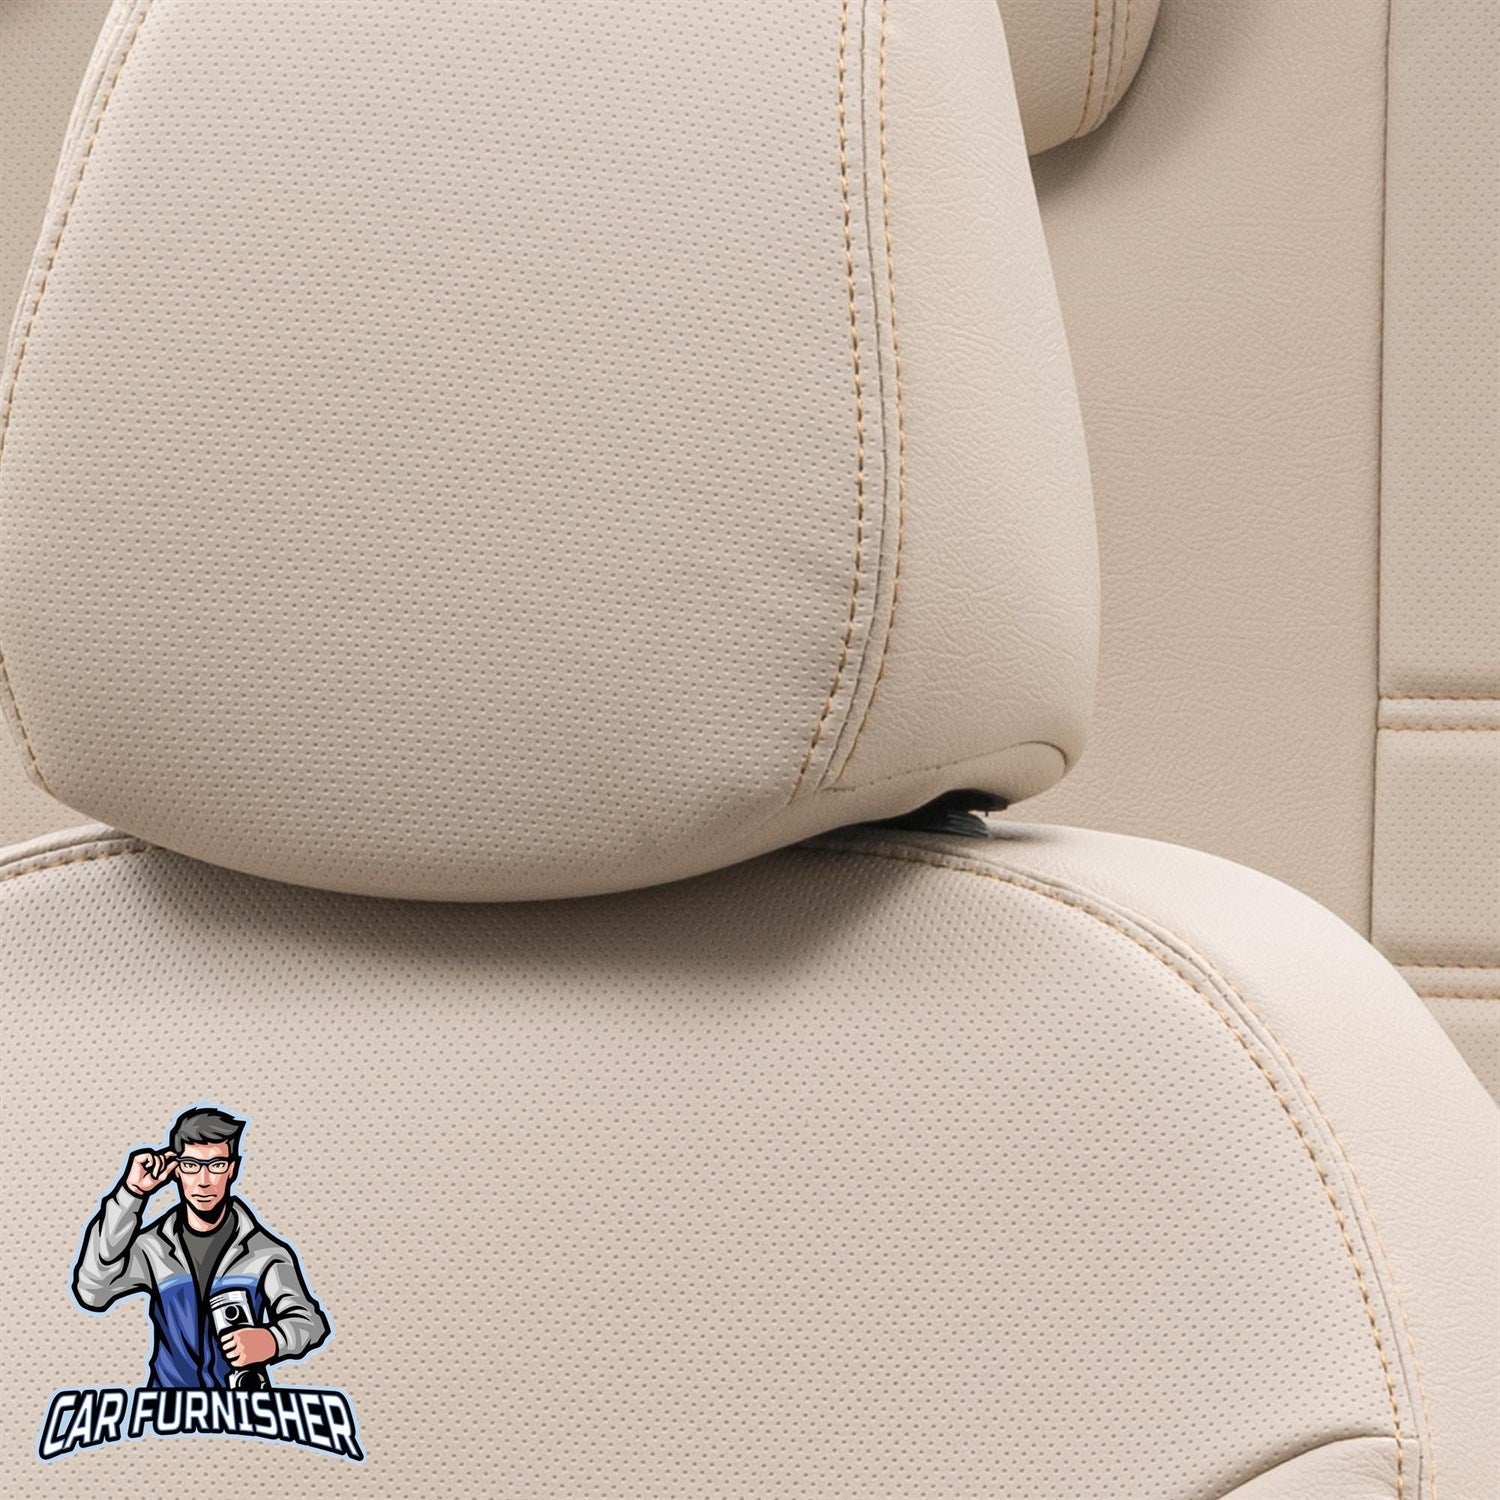 Citroen Jumpy Car Seat Covers 2008-2023 MK1/MK2 Istanbul Design Beige Leather & Fabric